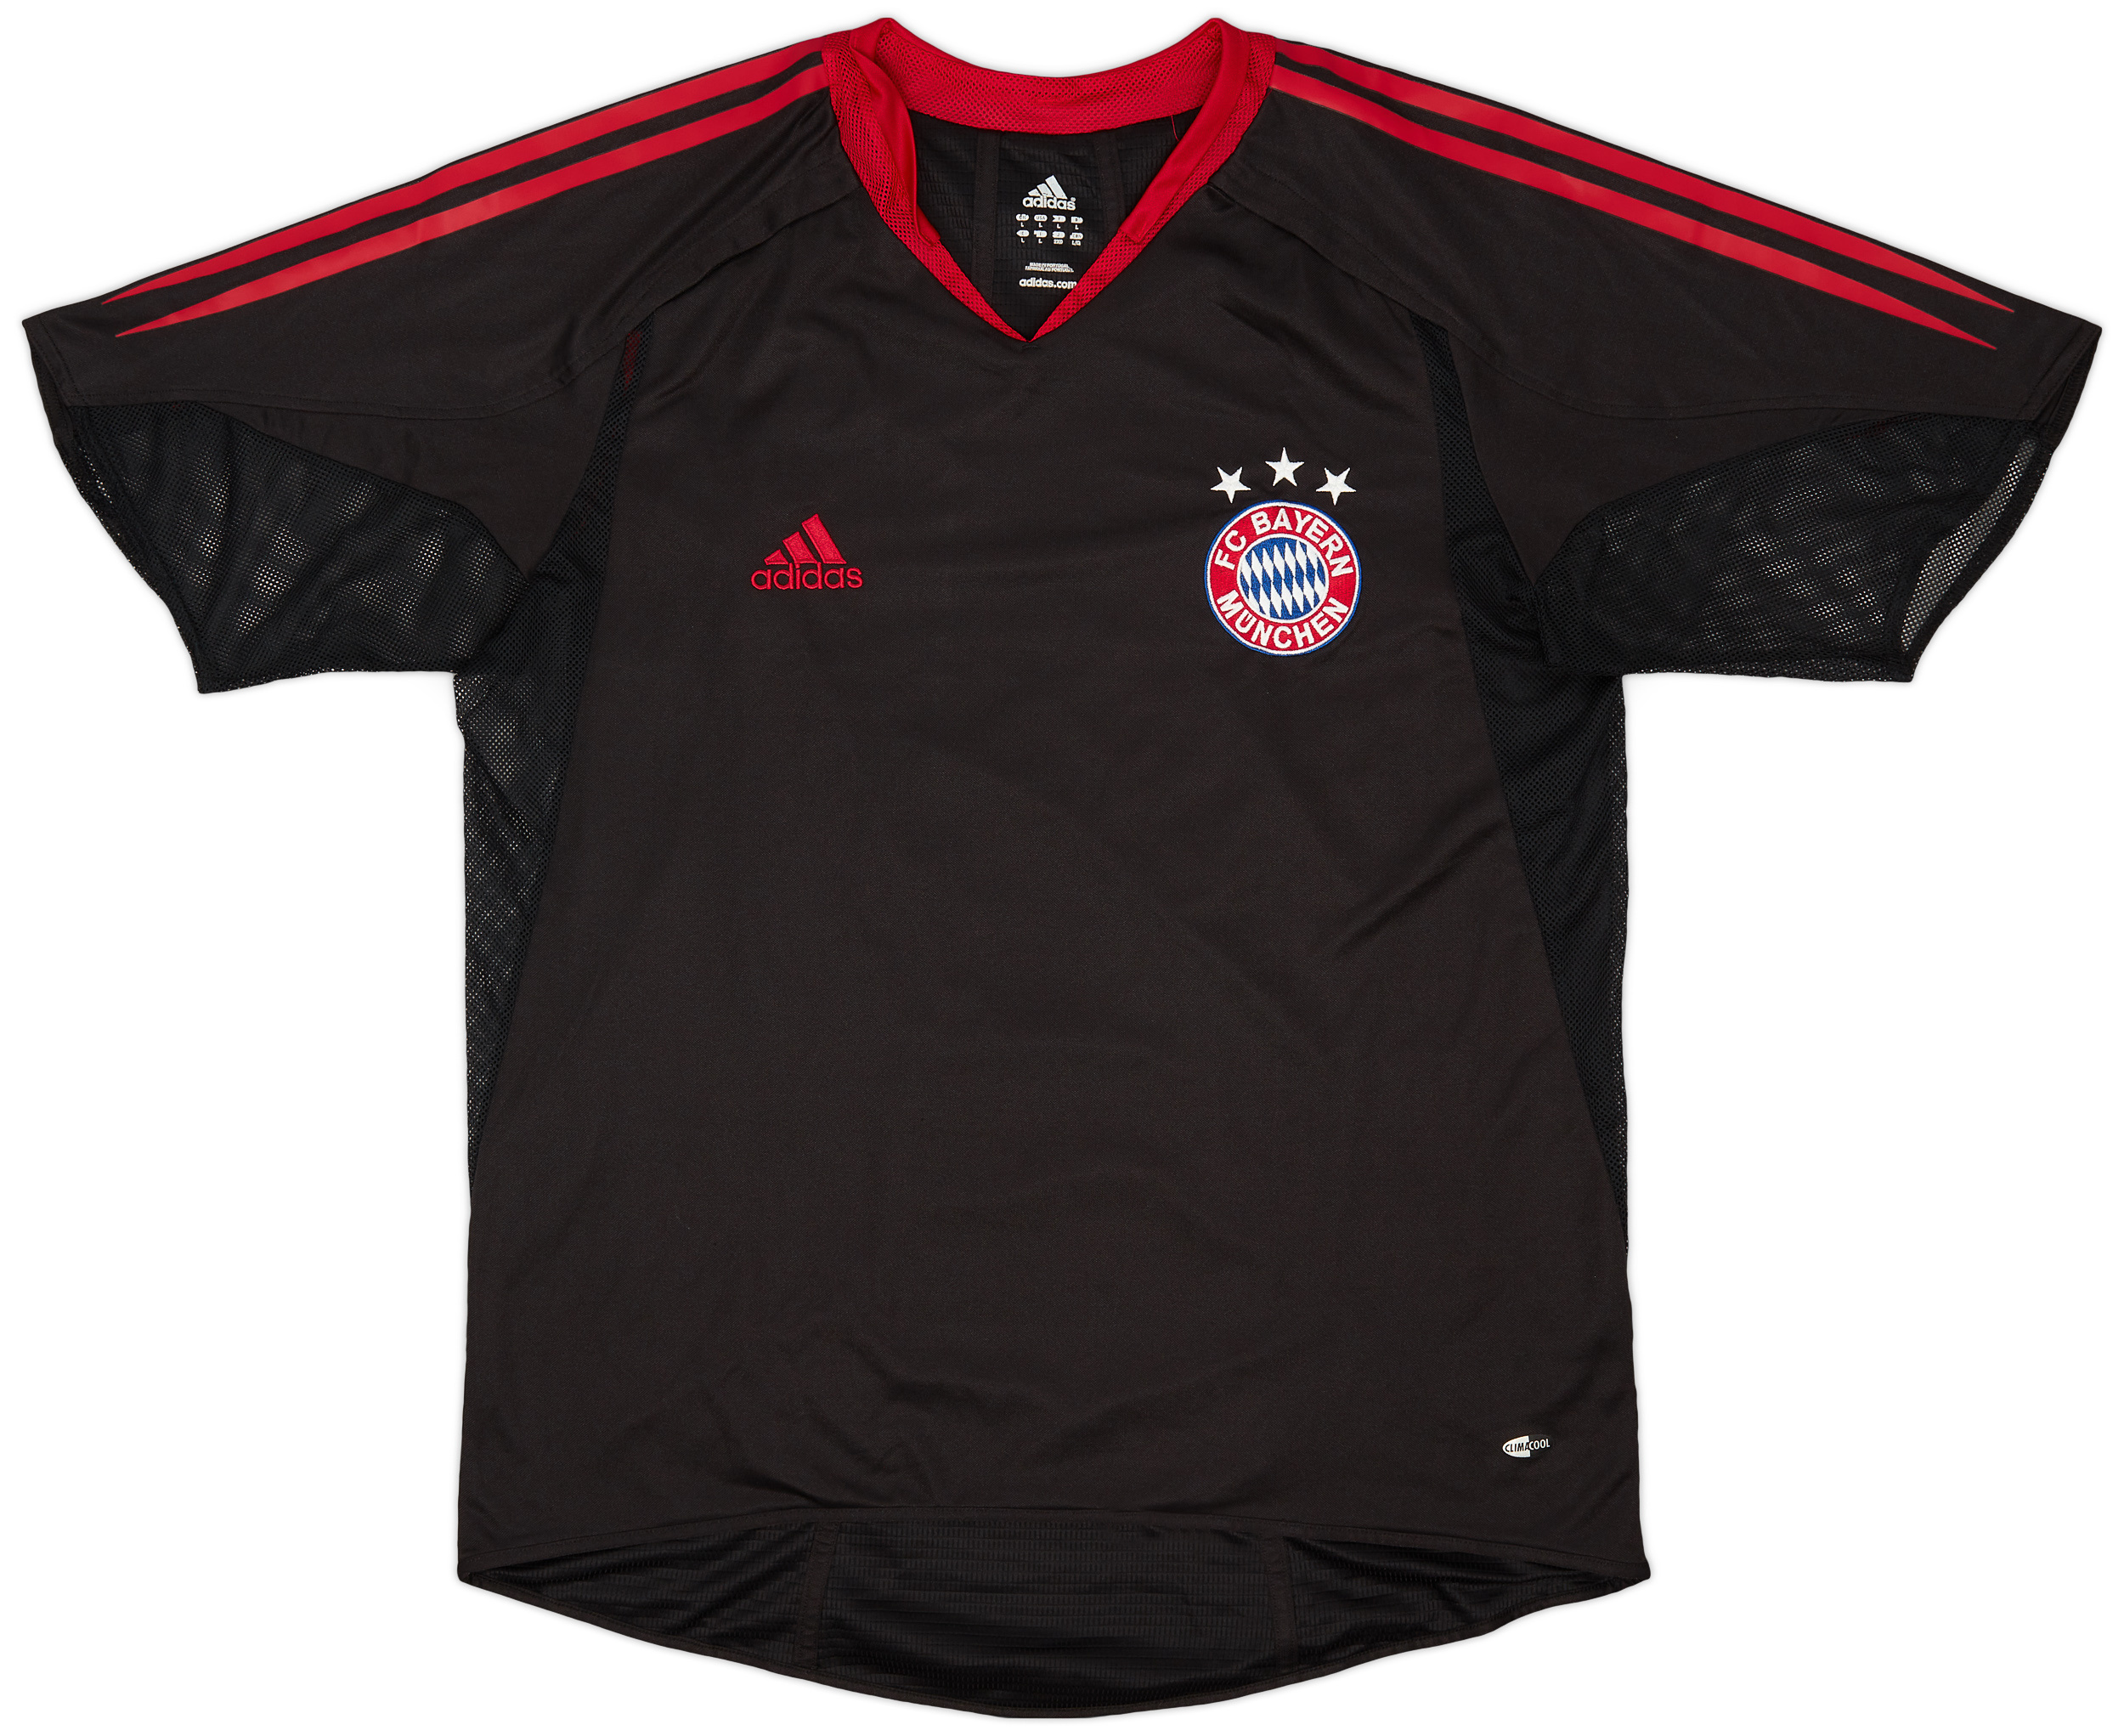 2004-05 Bayern Munich Player Issue CL Shirt - 9/10 - ()